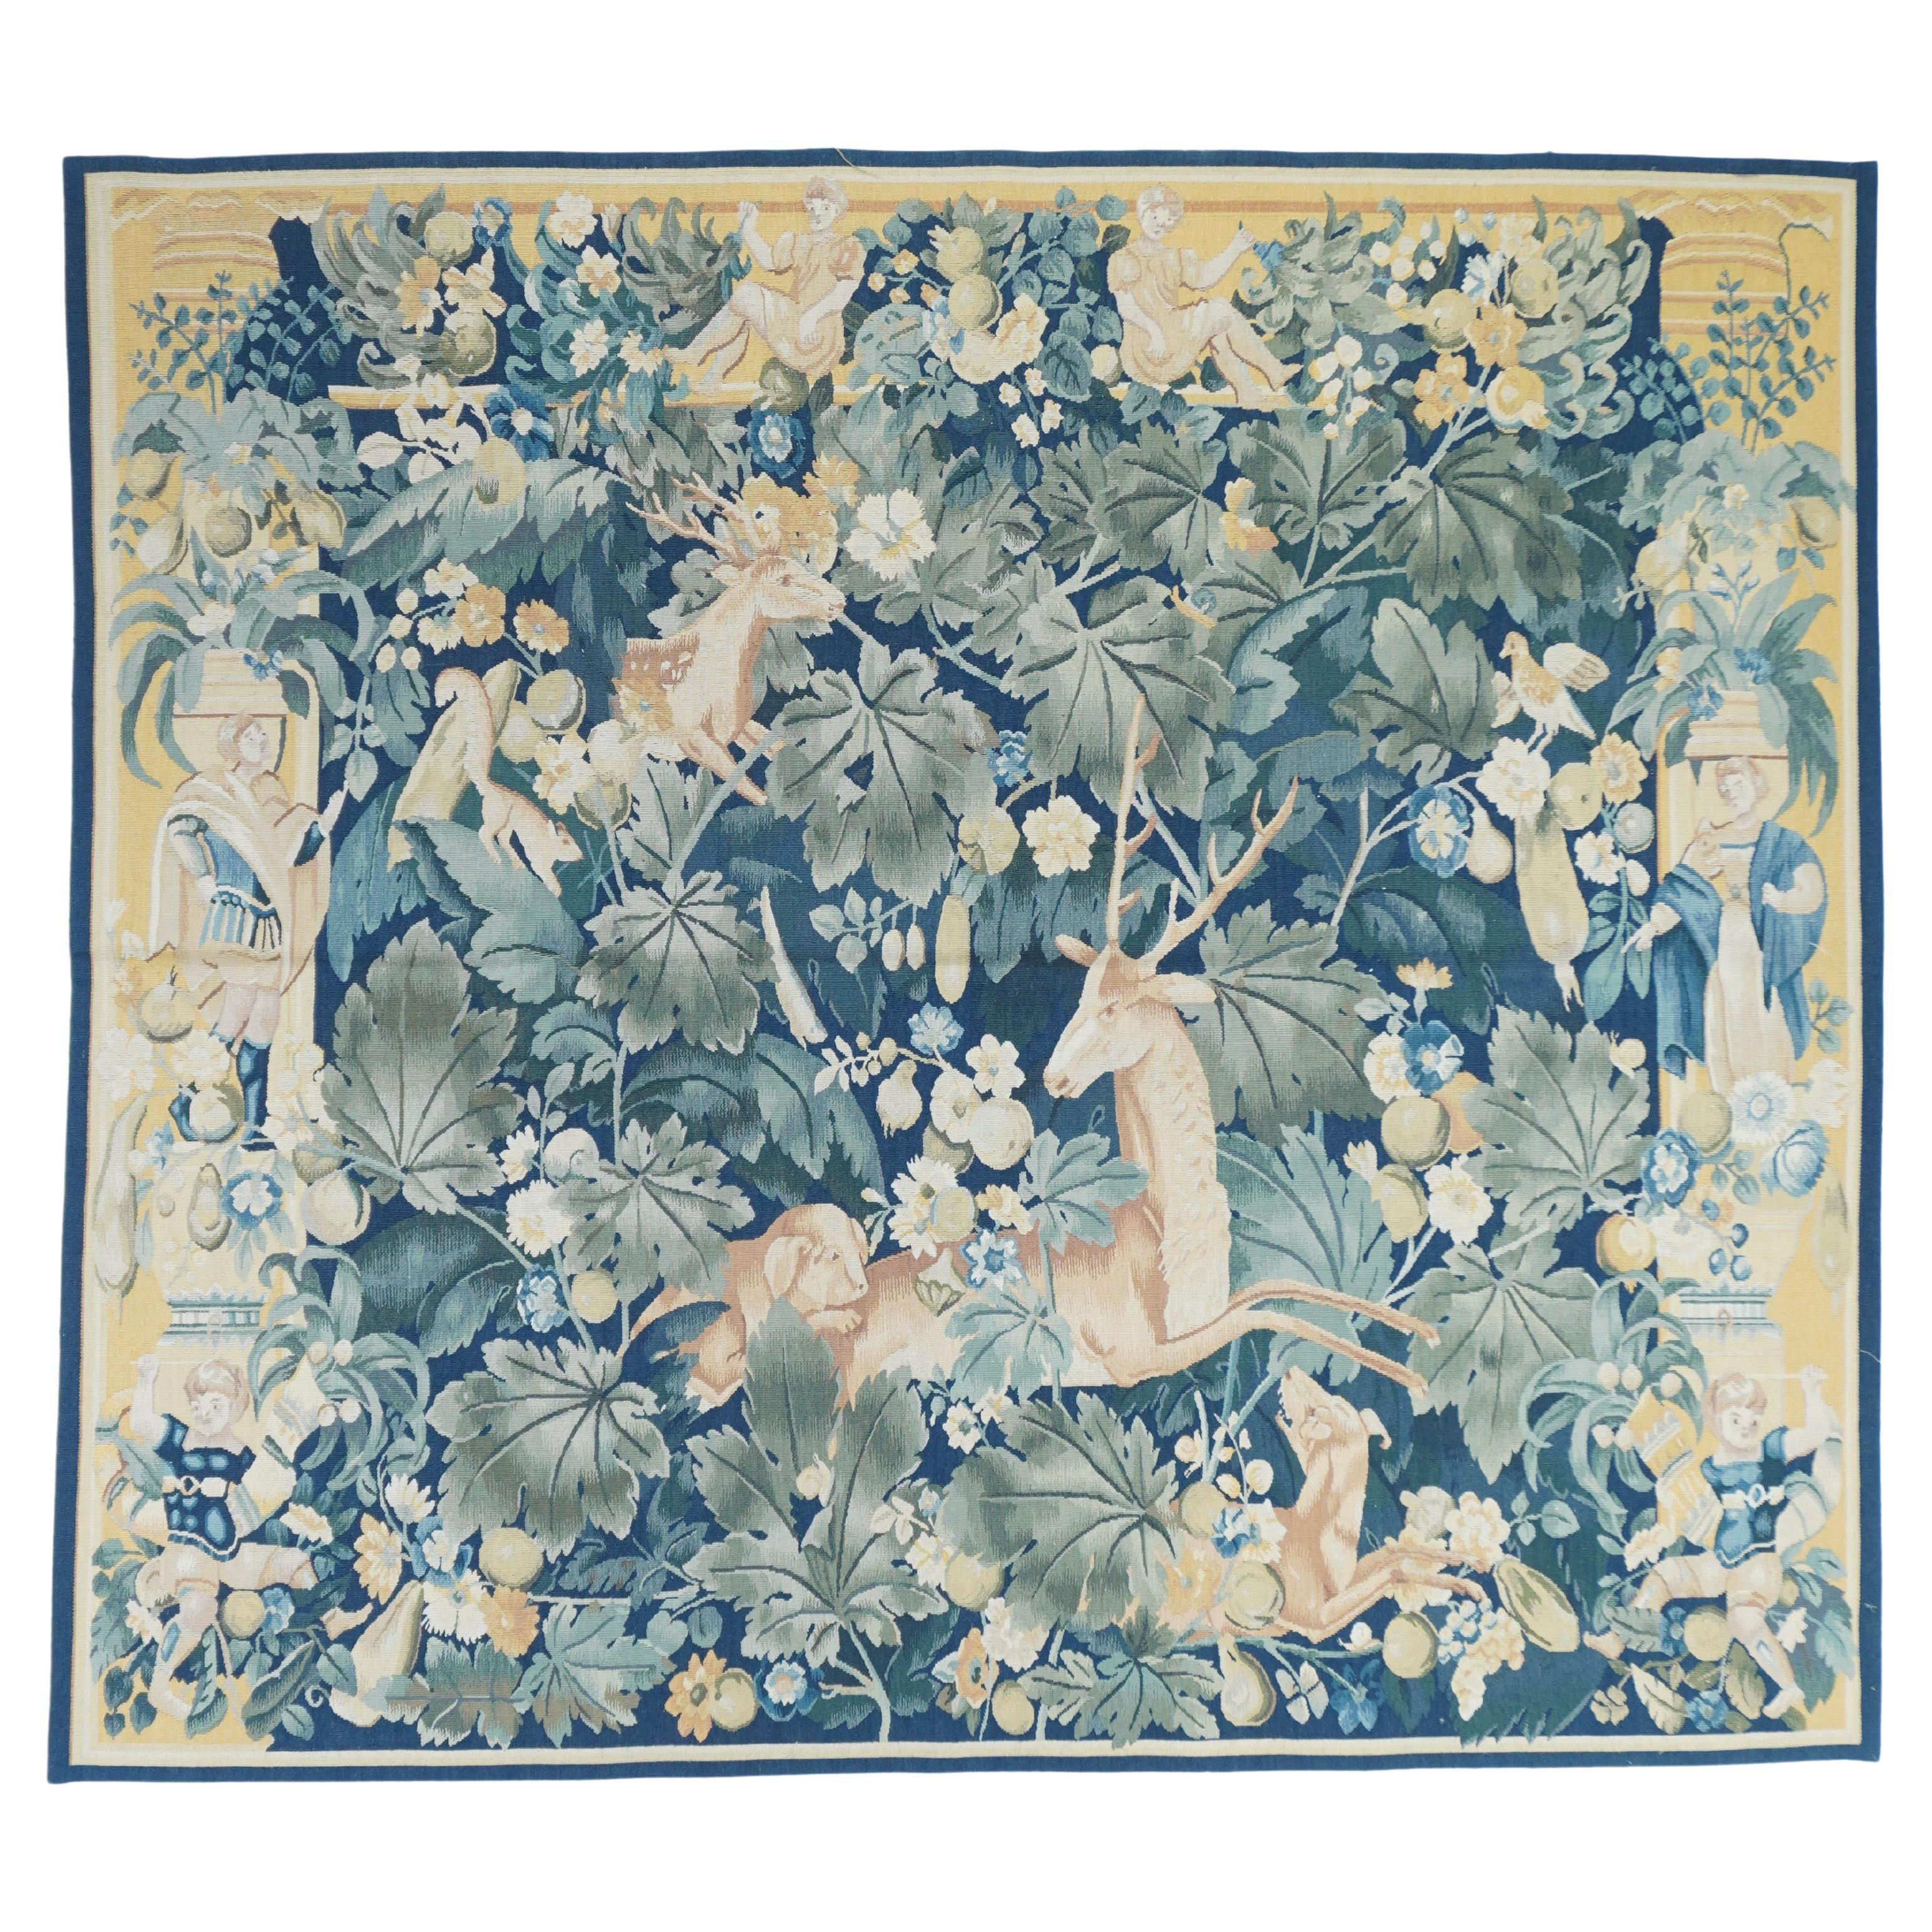 Vintage French Design Unicorn Tapestry Rug 4'8'' x 5'2''